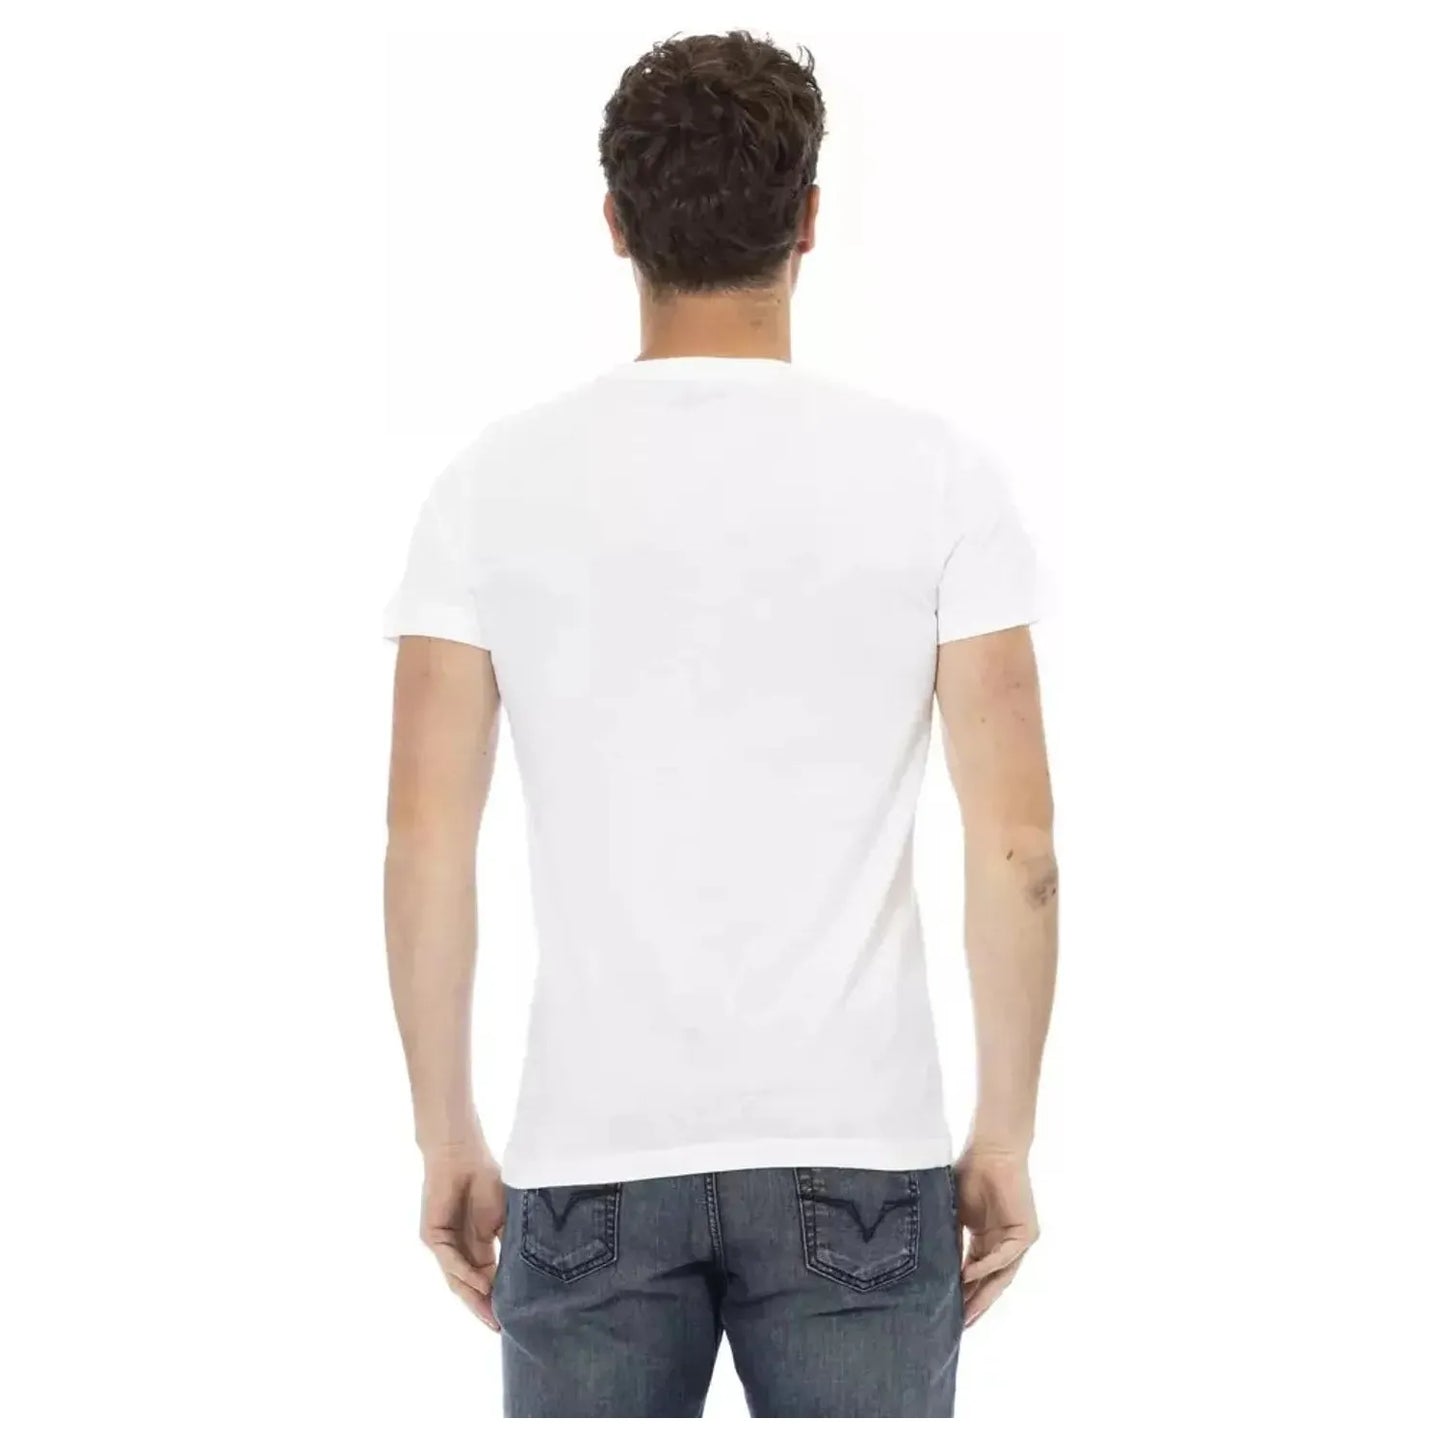 Trussardi Action Sleek Short Sleeve Fashion Statement Tee white-cotton-t-shirt-101